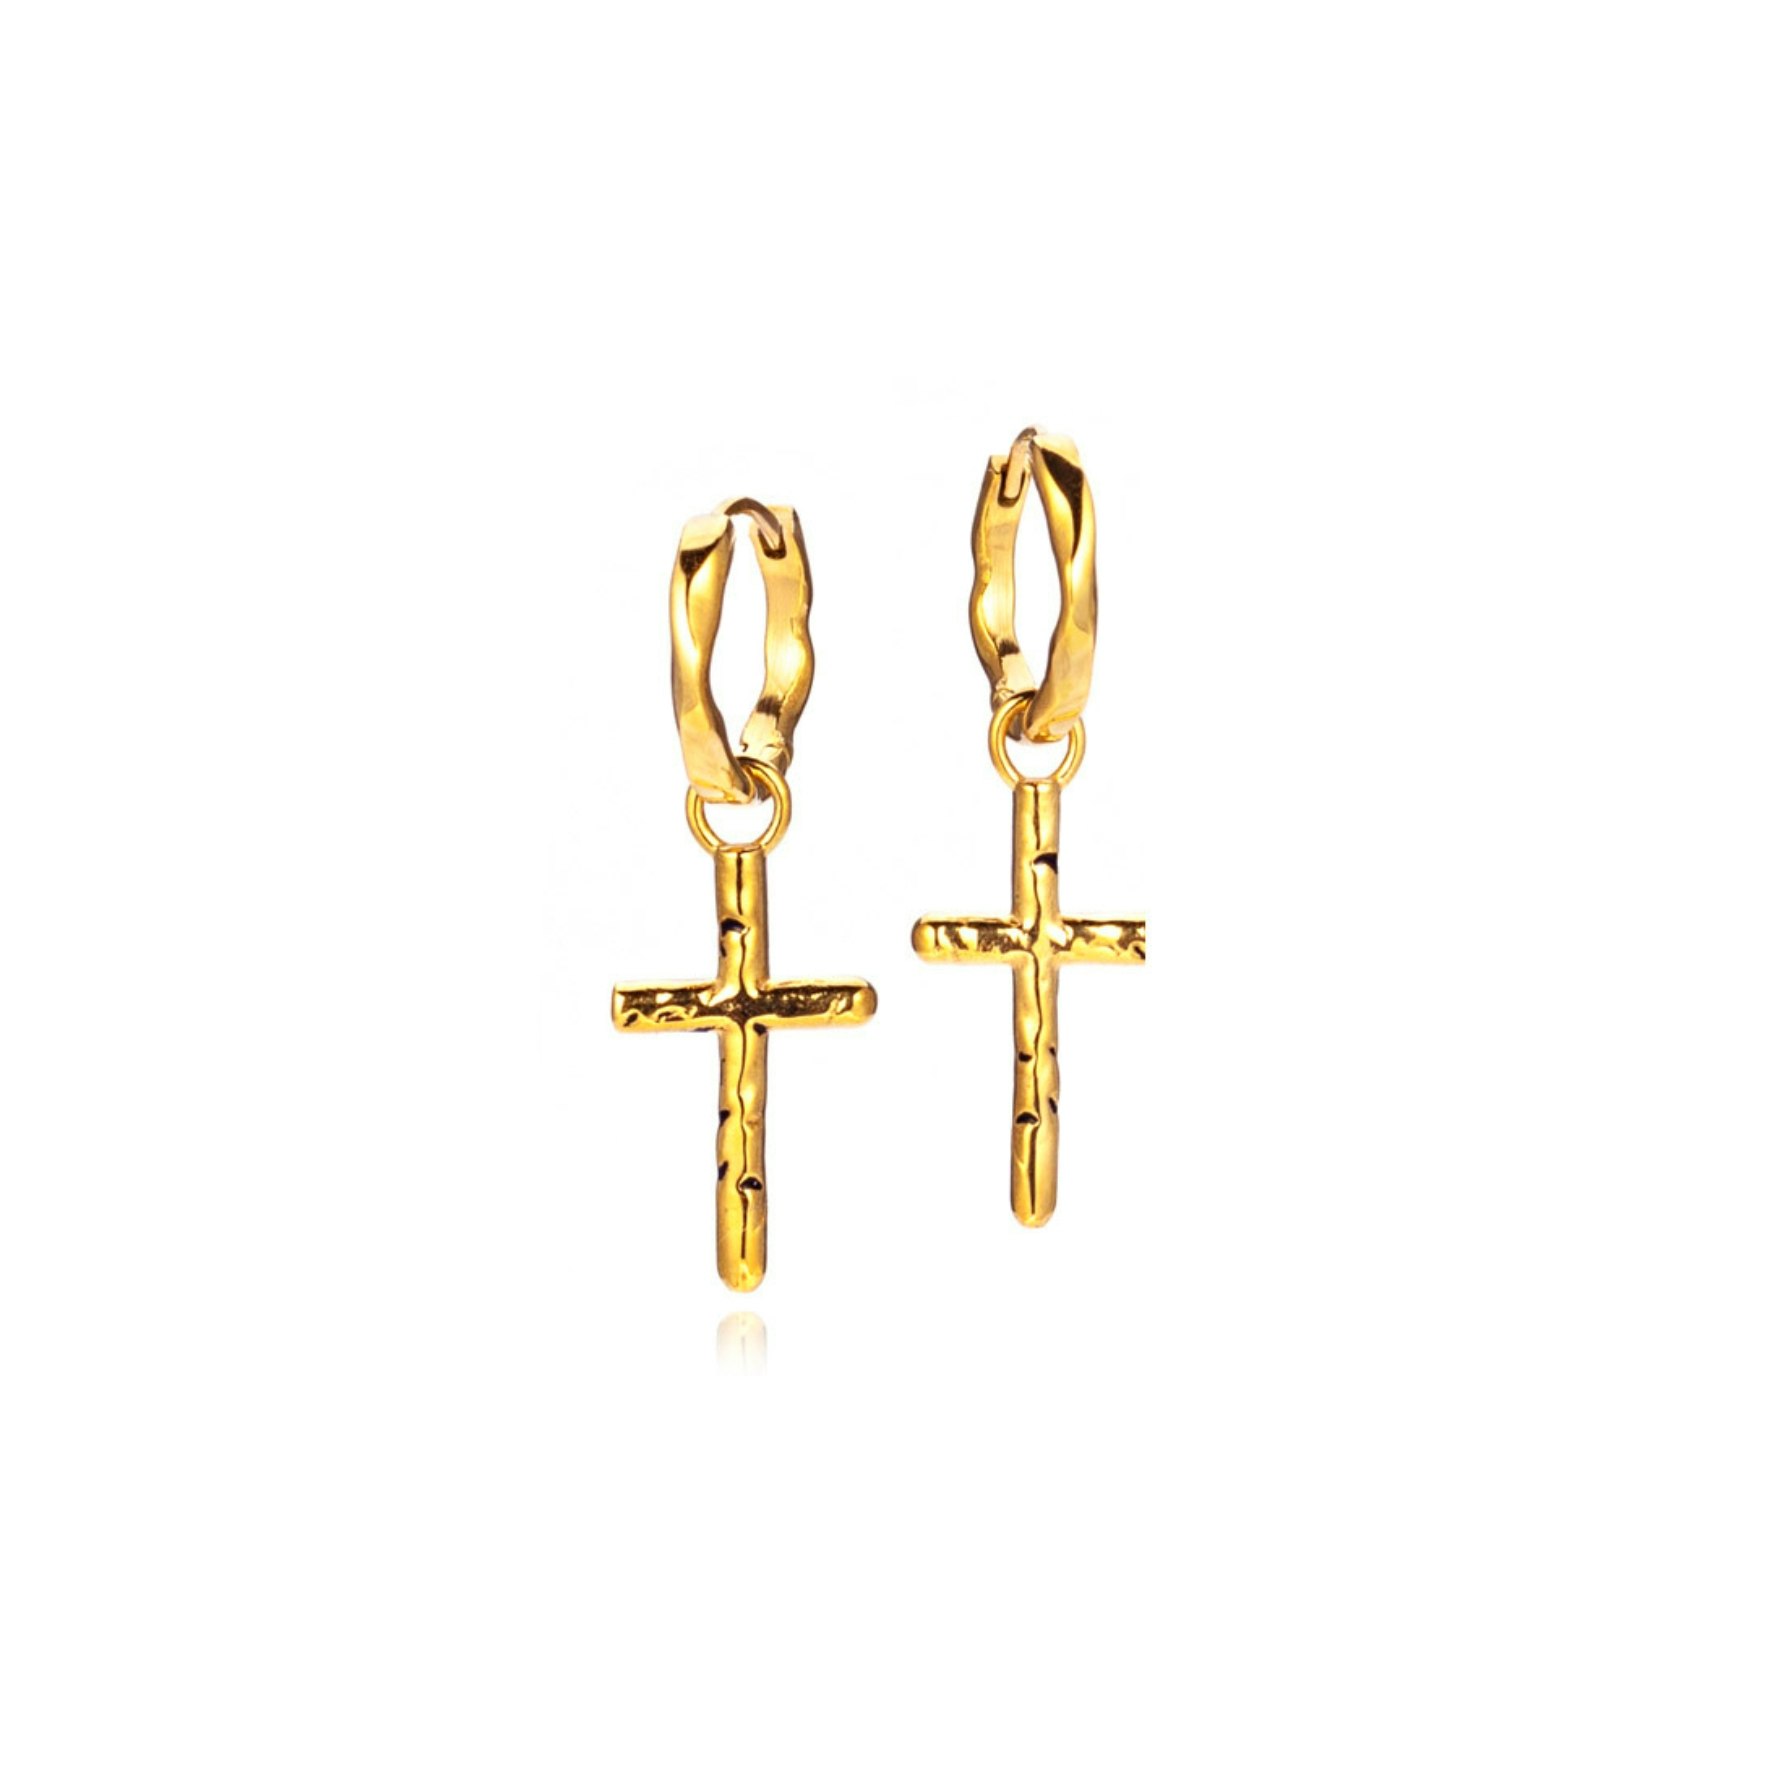 Cross Earrings from SAMIE in Goldplated stainless steel